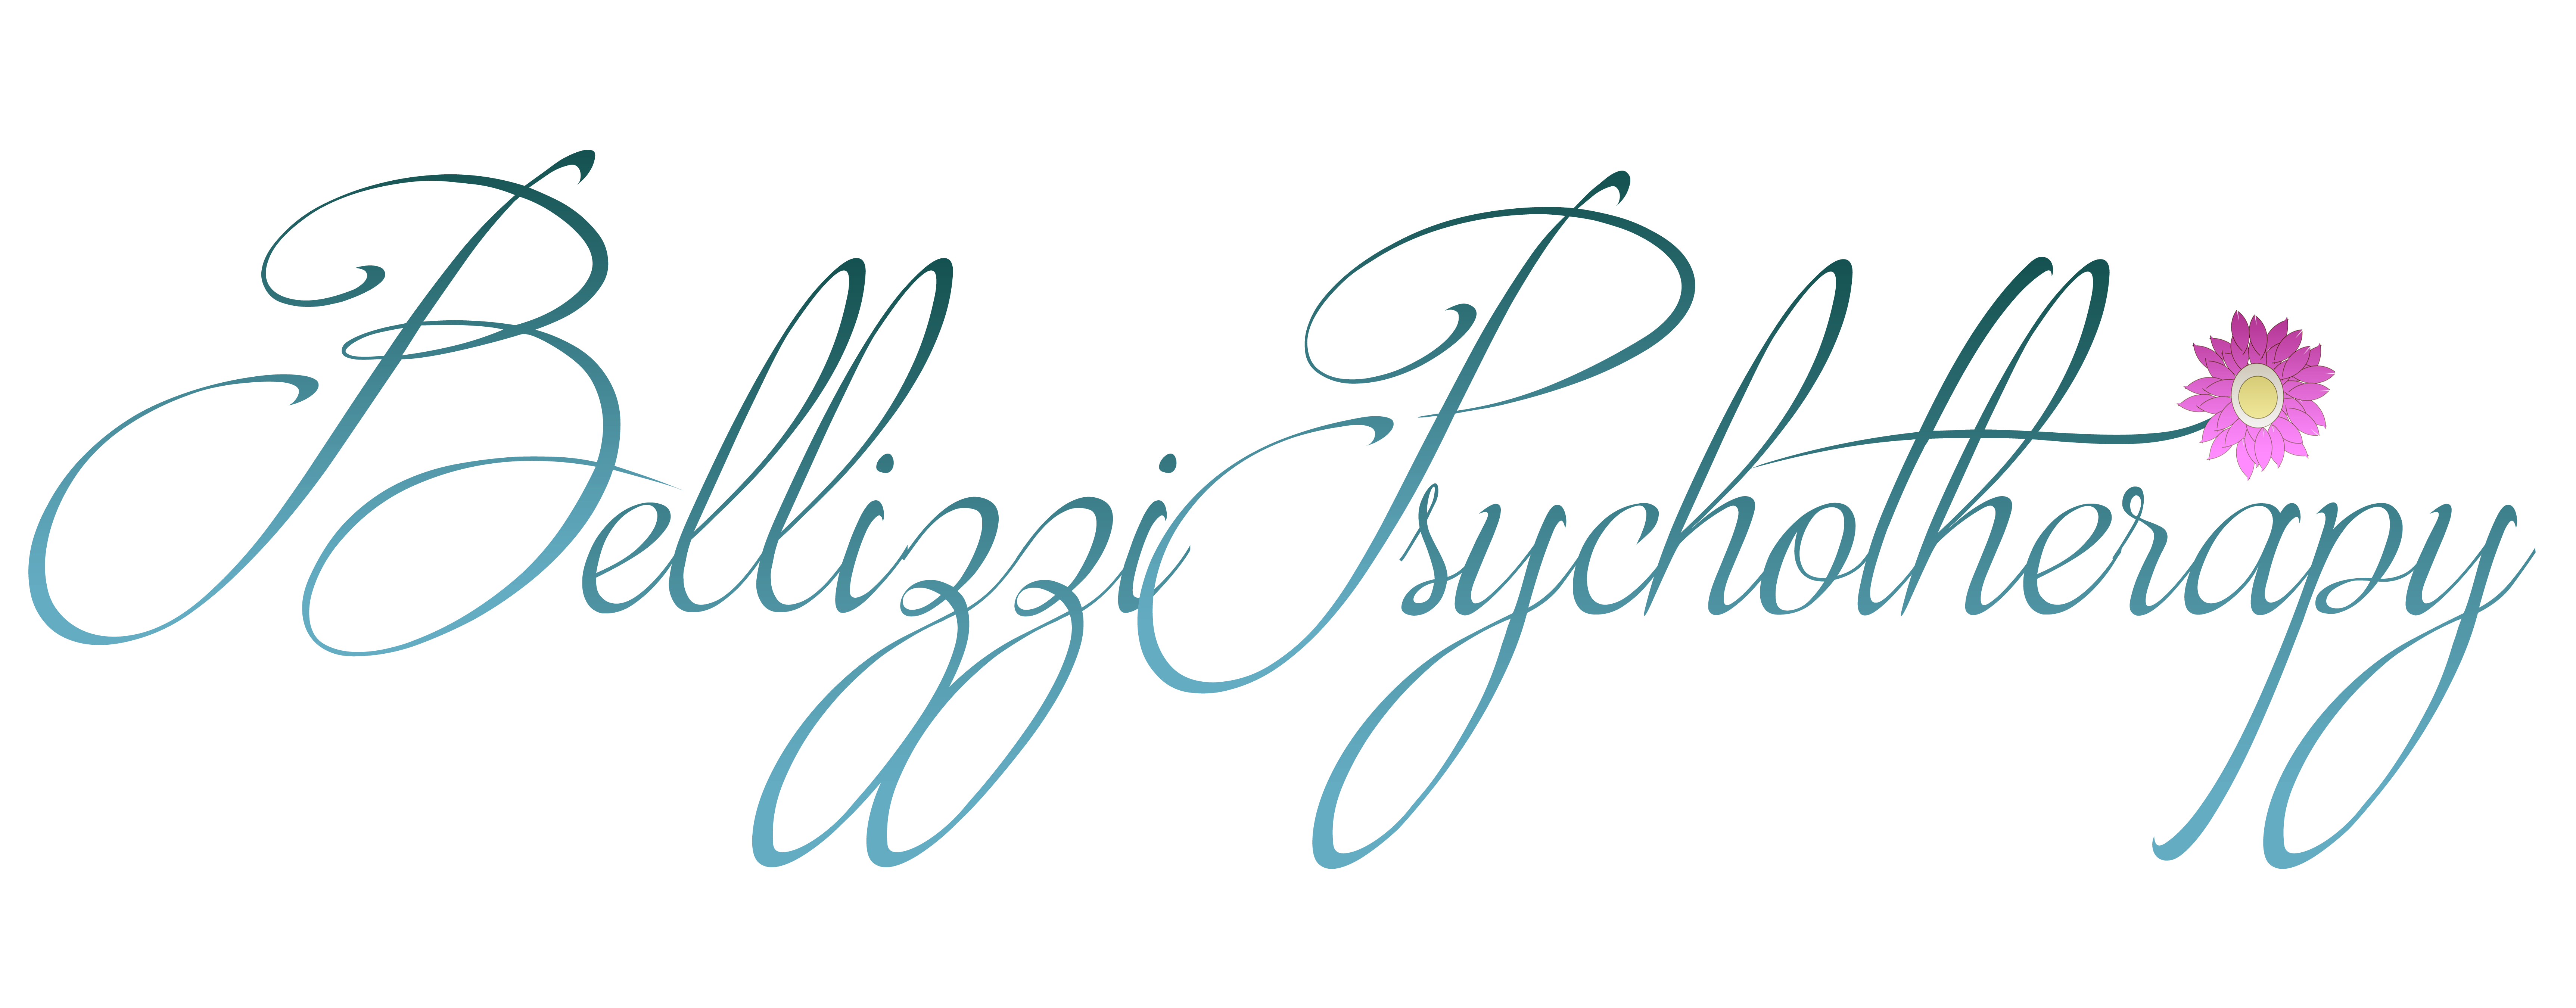 Bellizzi Psychotherapy | Heather Bellizzi, LCSW - Psychotherapist